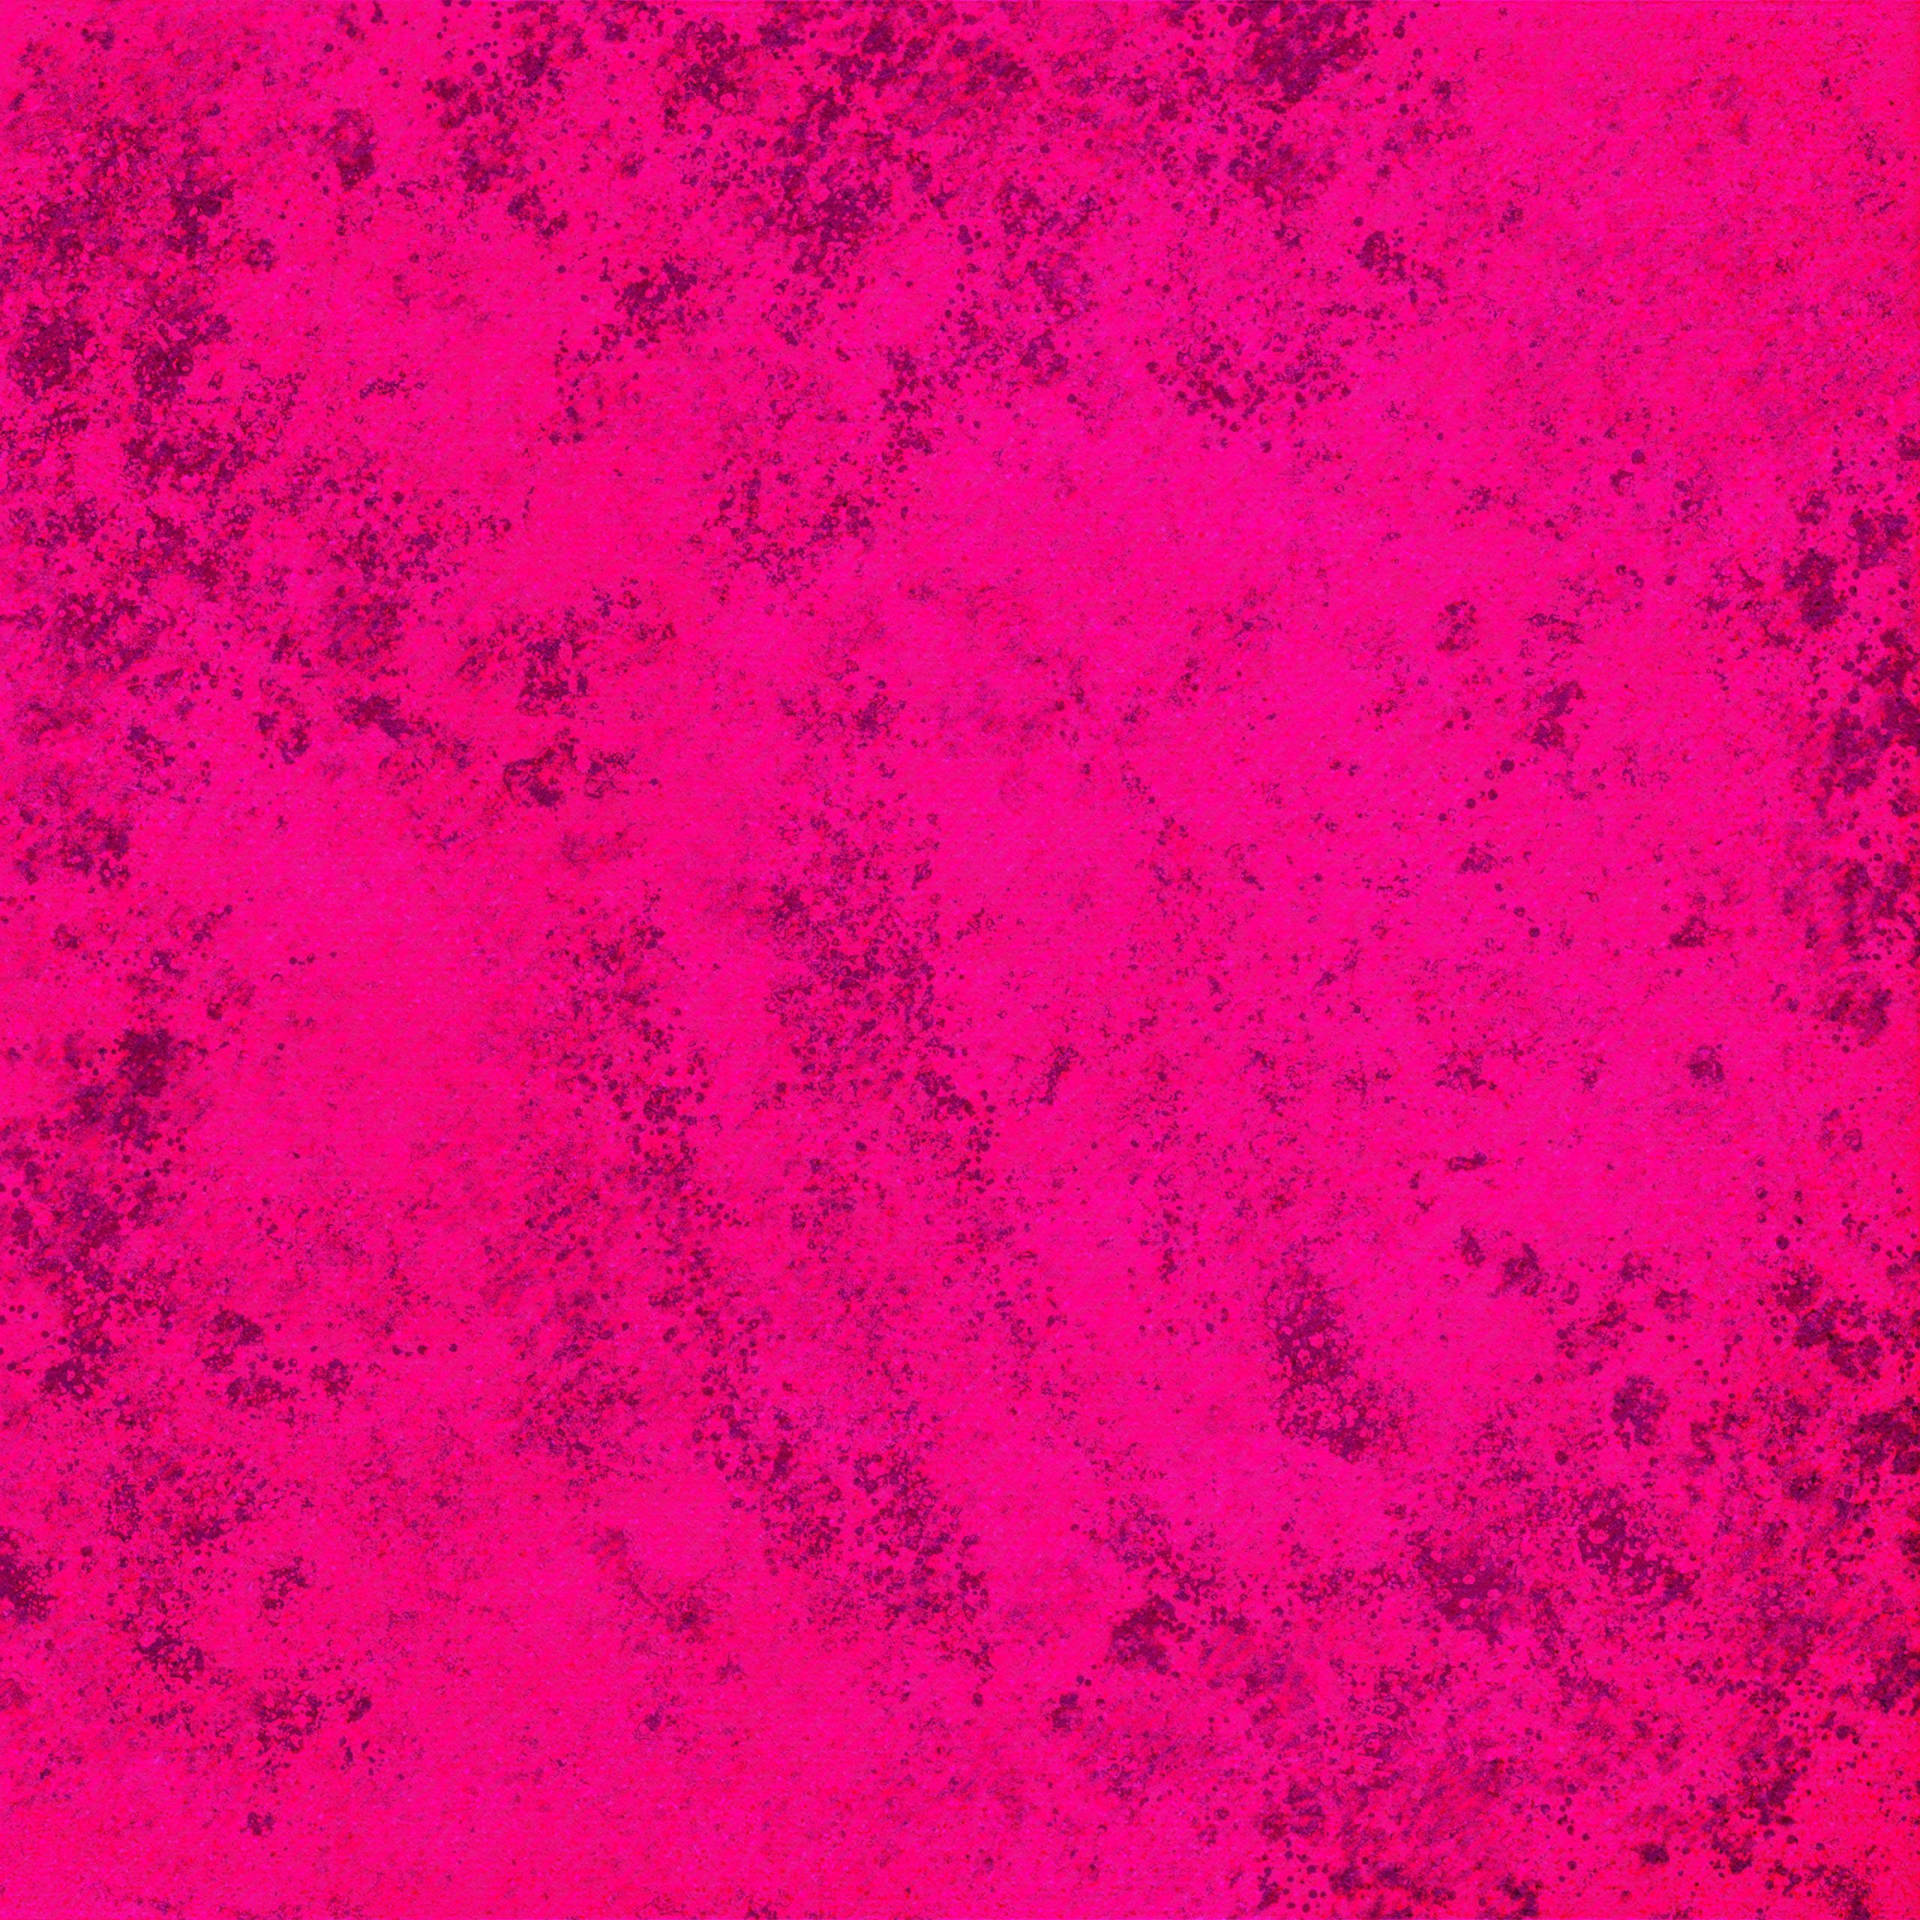 Textured Hot Pink Aesthetic Wallpaper